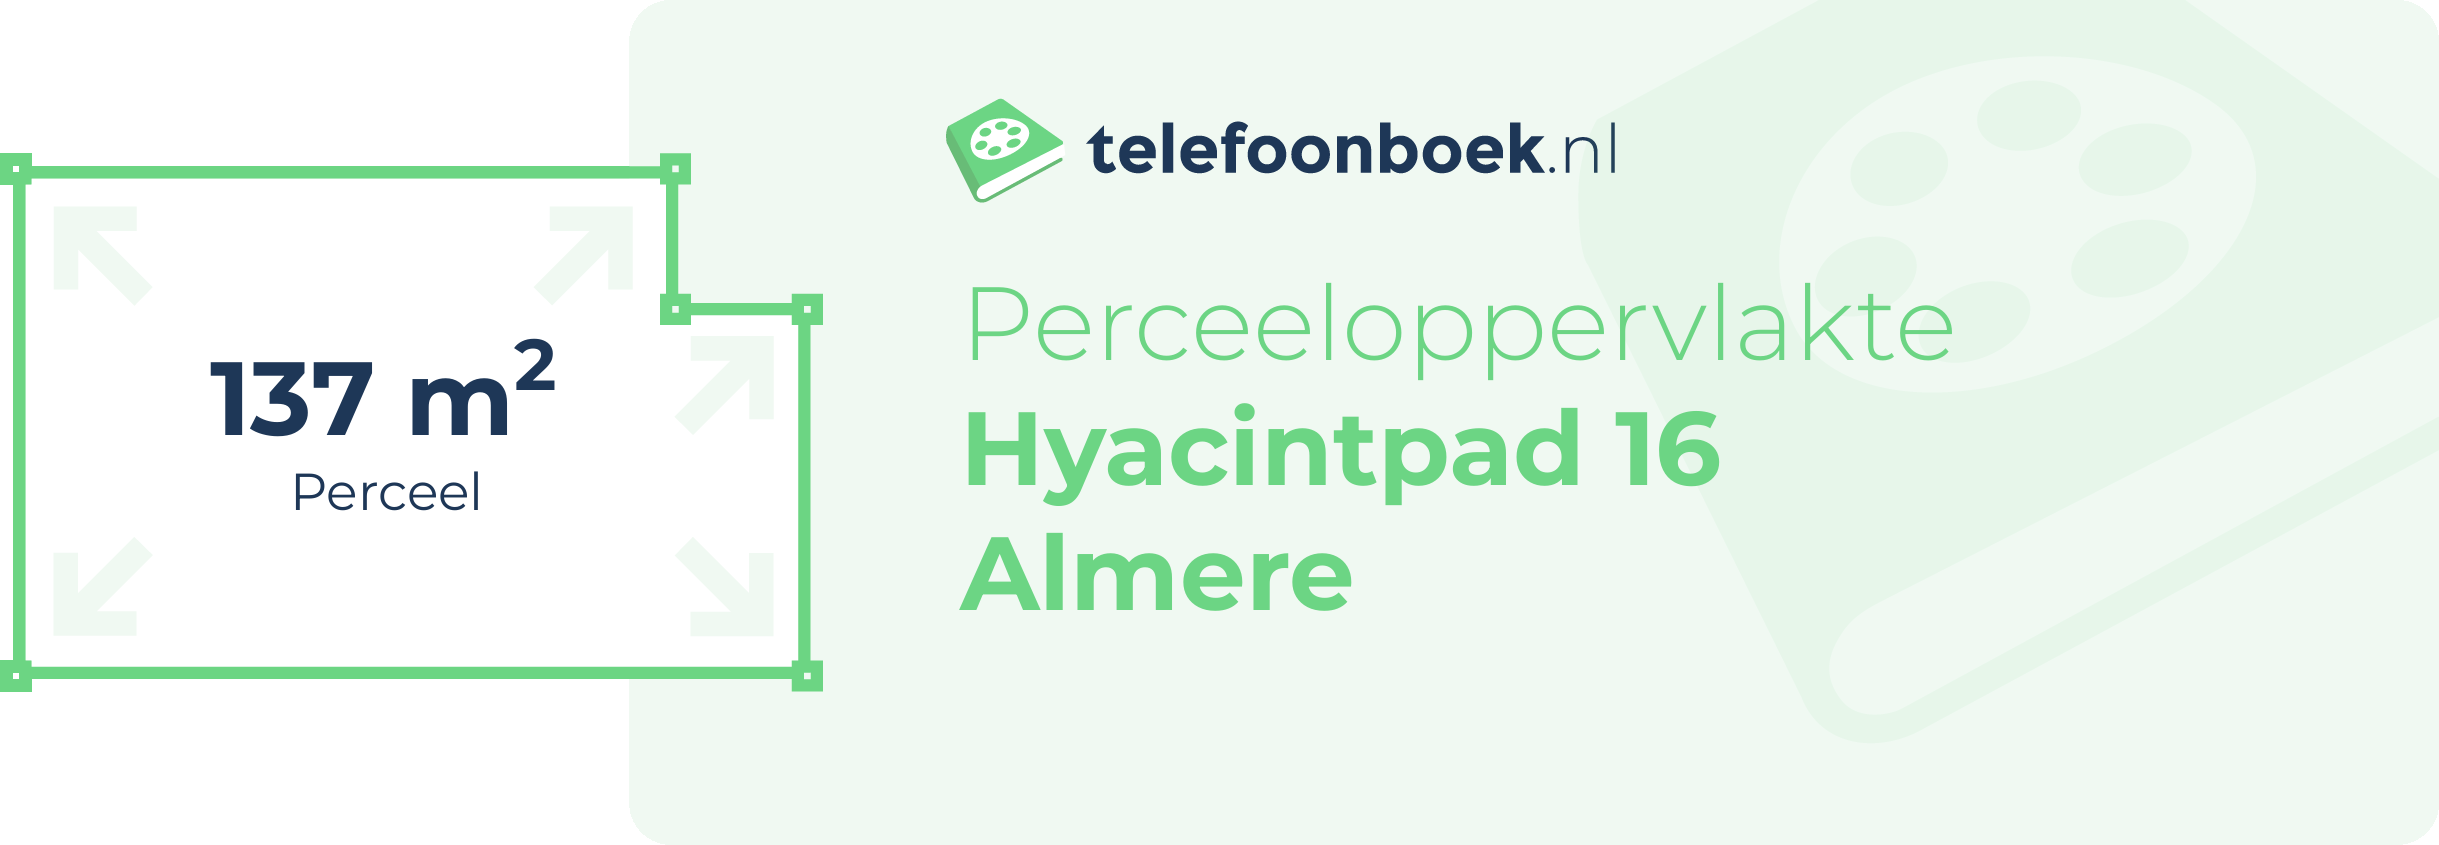 Perceeloppervlakte Hyacintpad 16 Almere